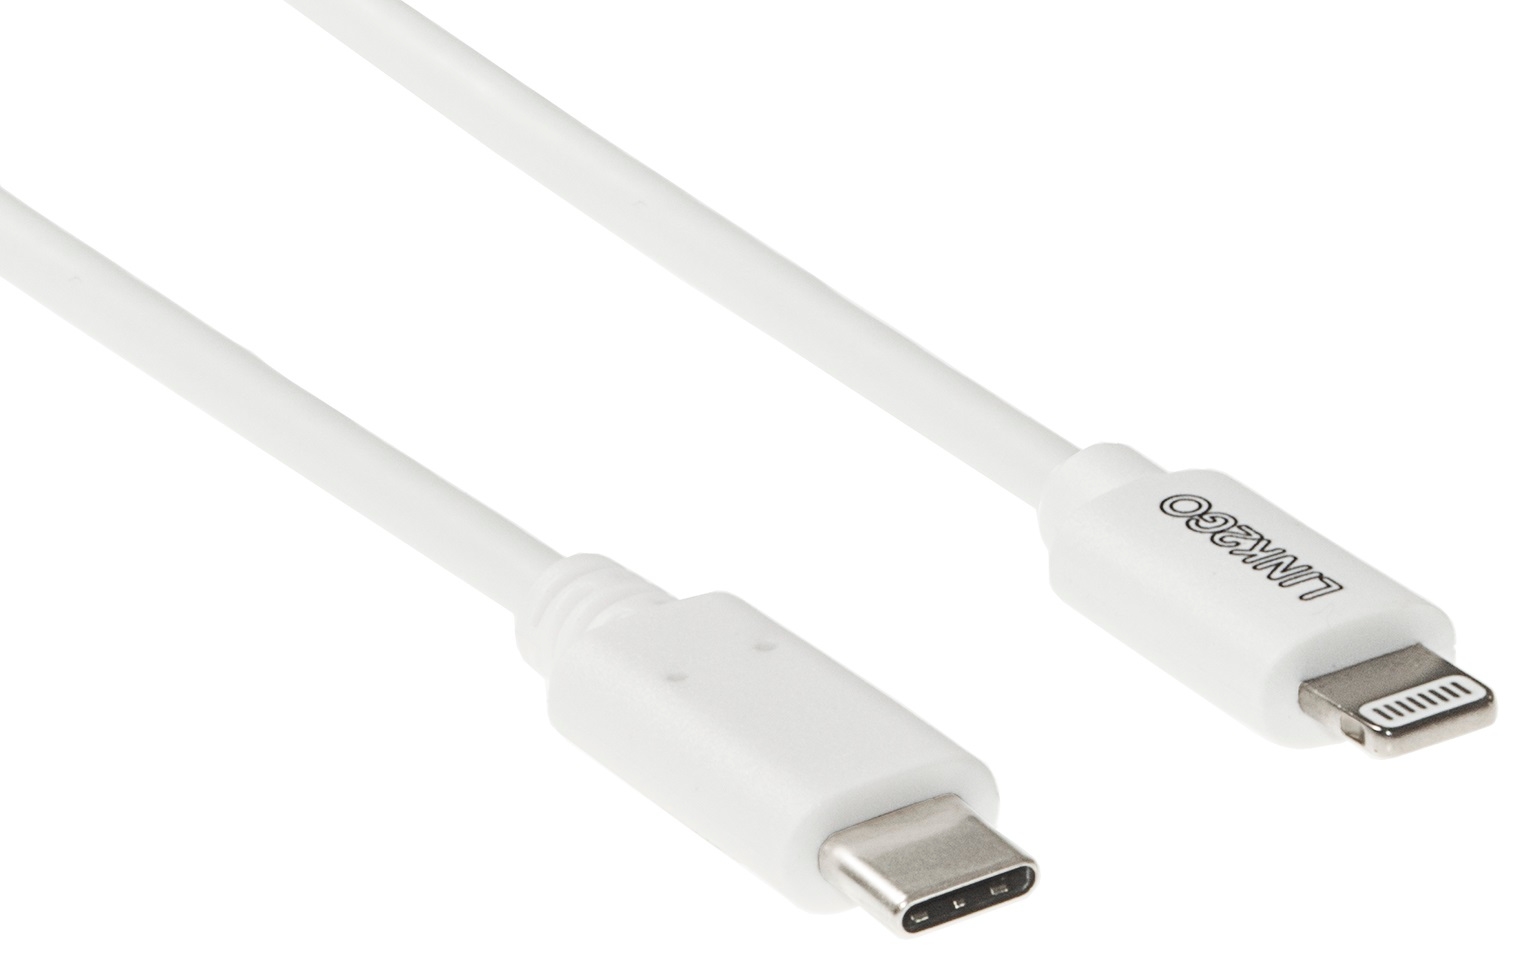 LINK2GO USB-C to Lightining Cable 1m US8000FWB MFI